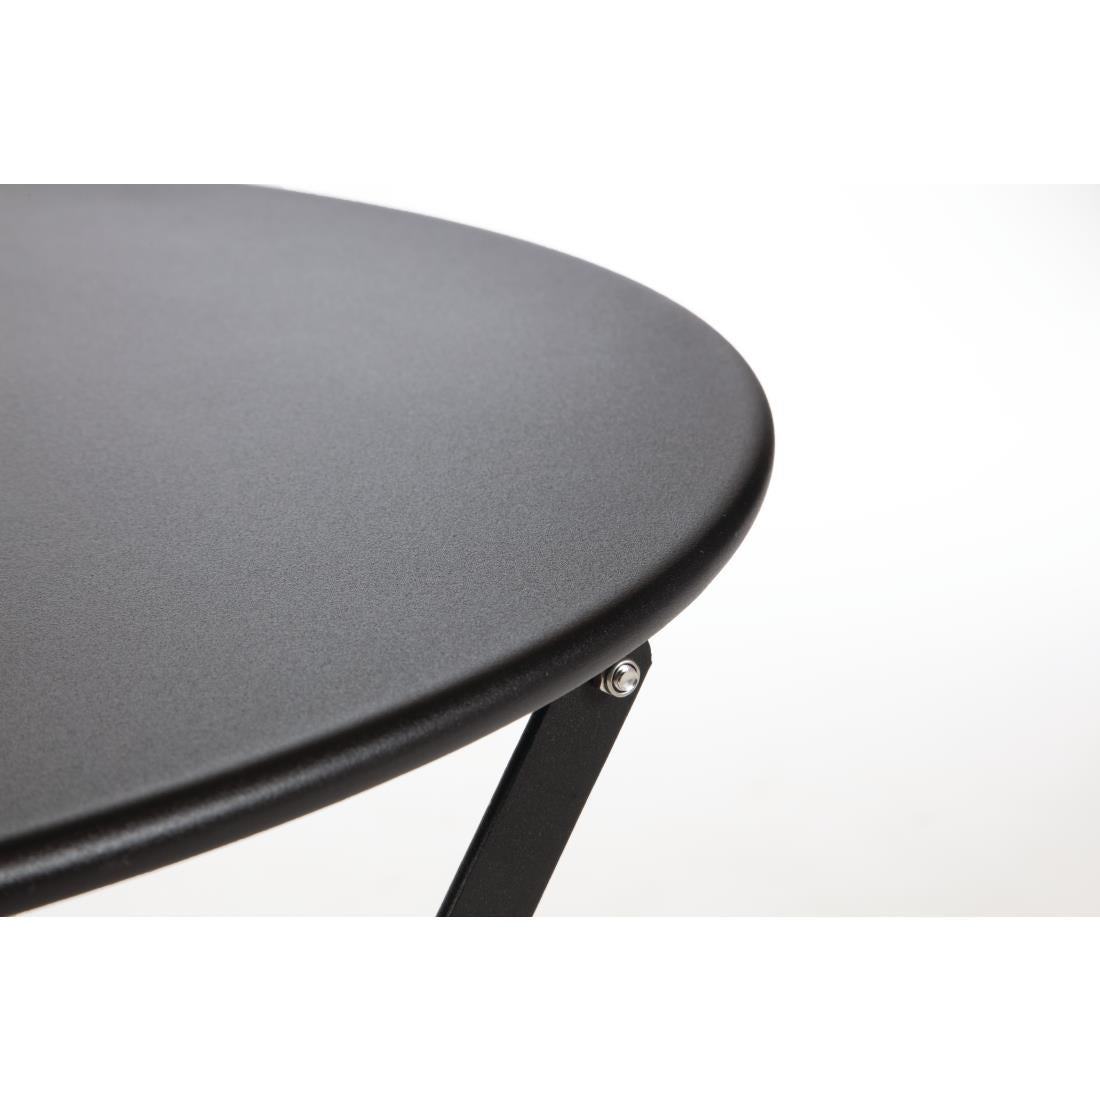 Bolero Black Pavement Style Steel Table 595mm JD Catering Equipment Solutions Ltd